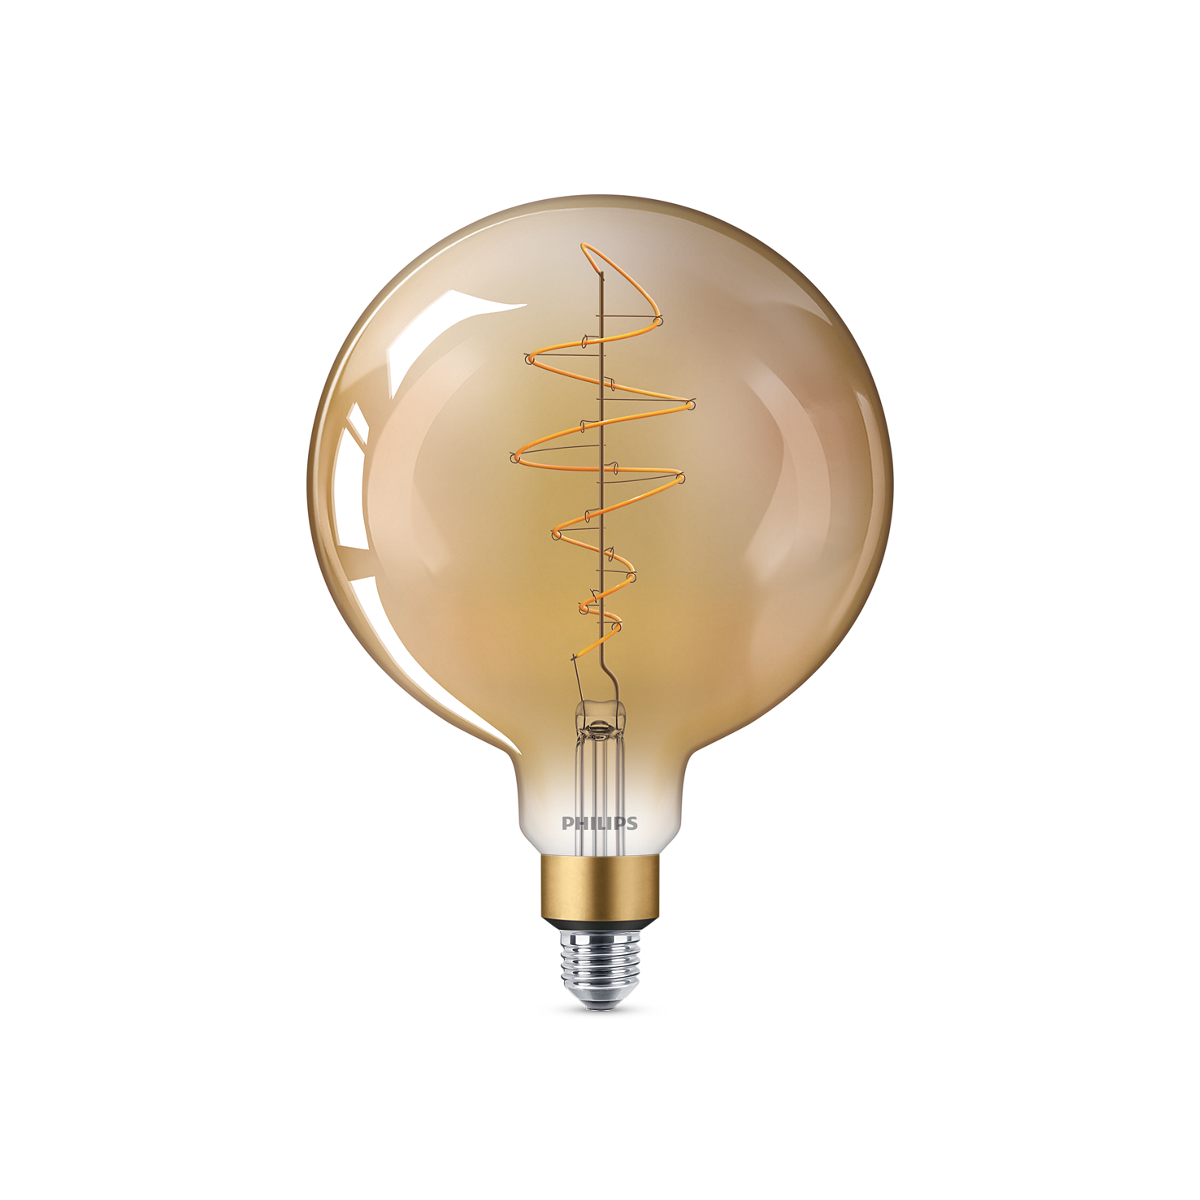 Decorative Light Lamp PNG Transparent Image